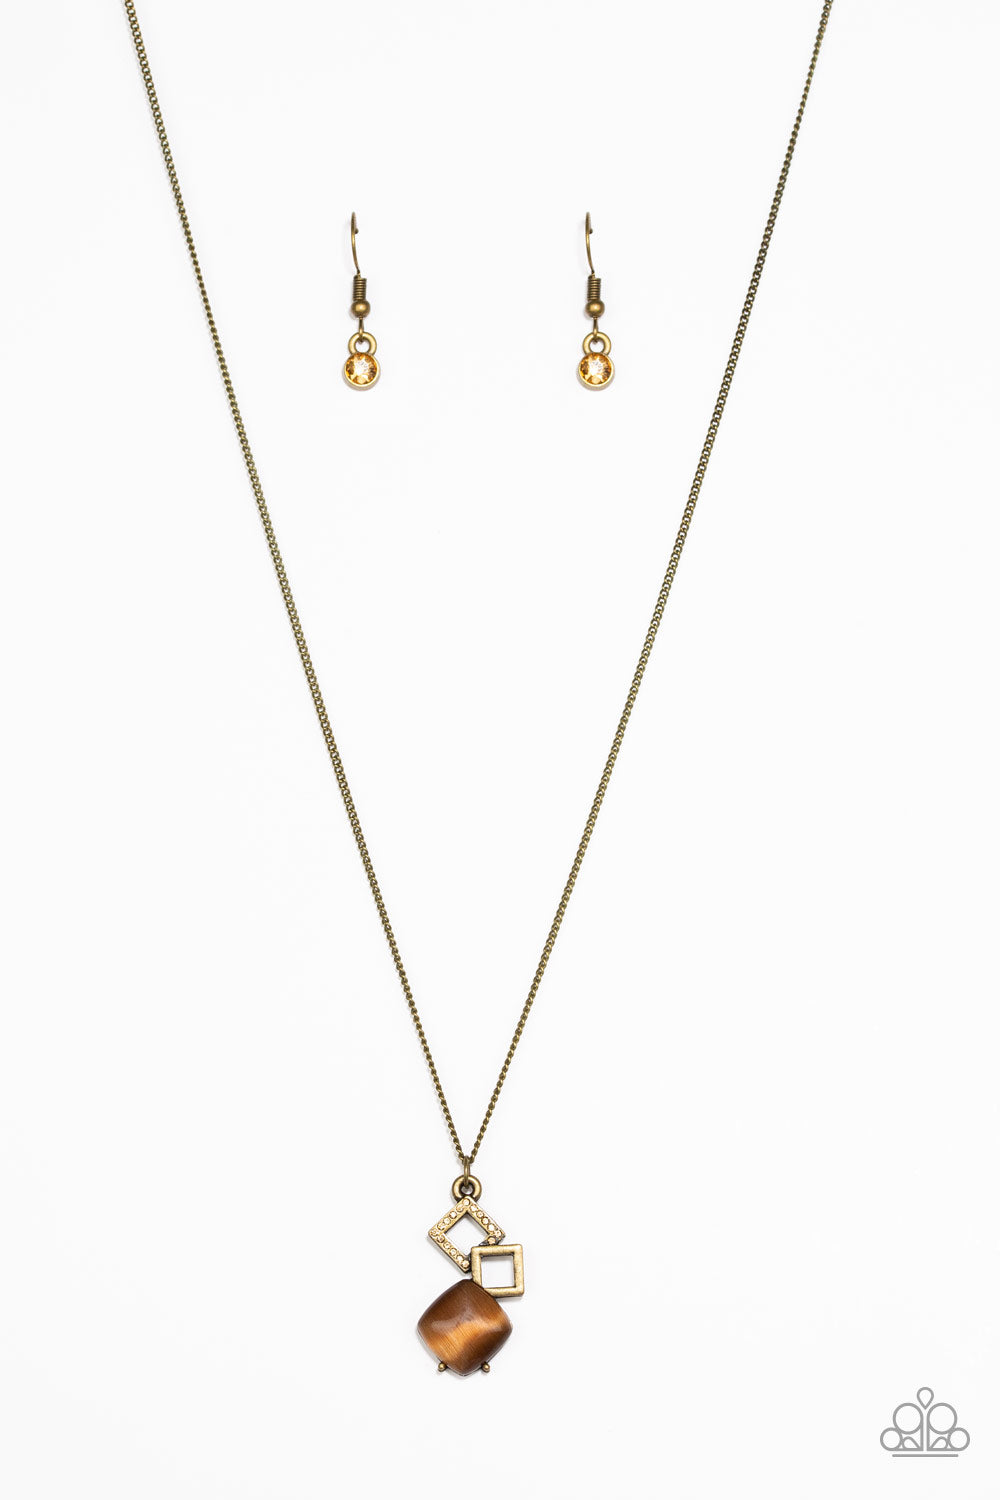 Stylishly Square - Brass Necklace freeshipping - JewLz4u Gemstone Gallery